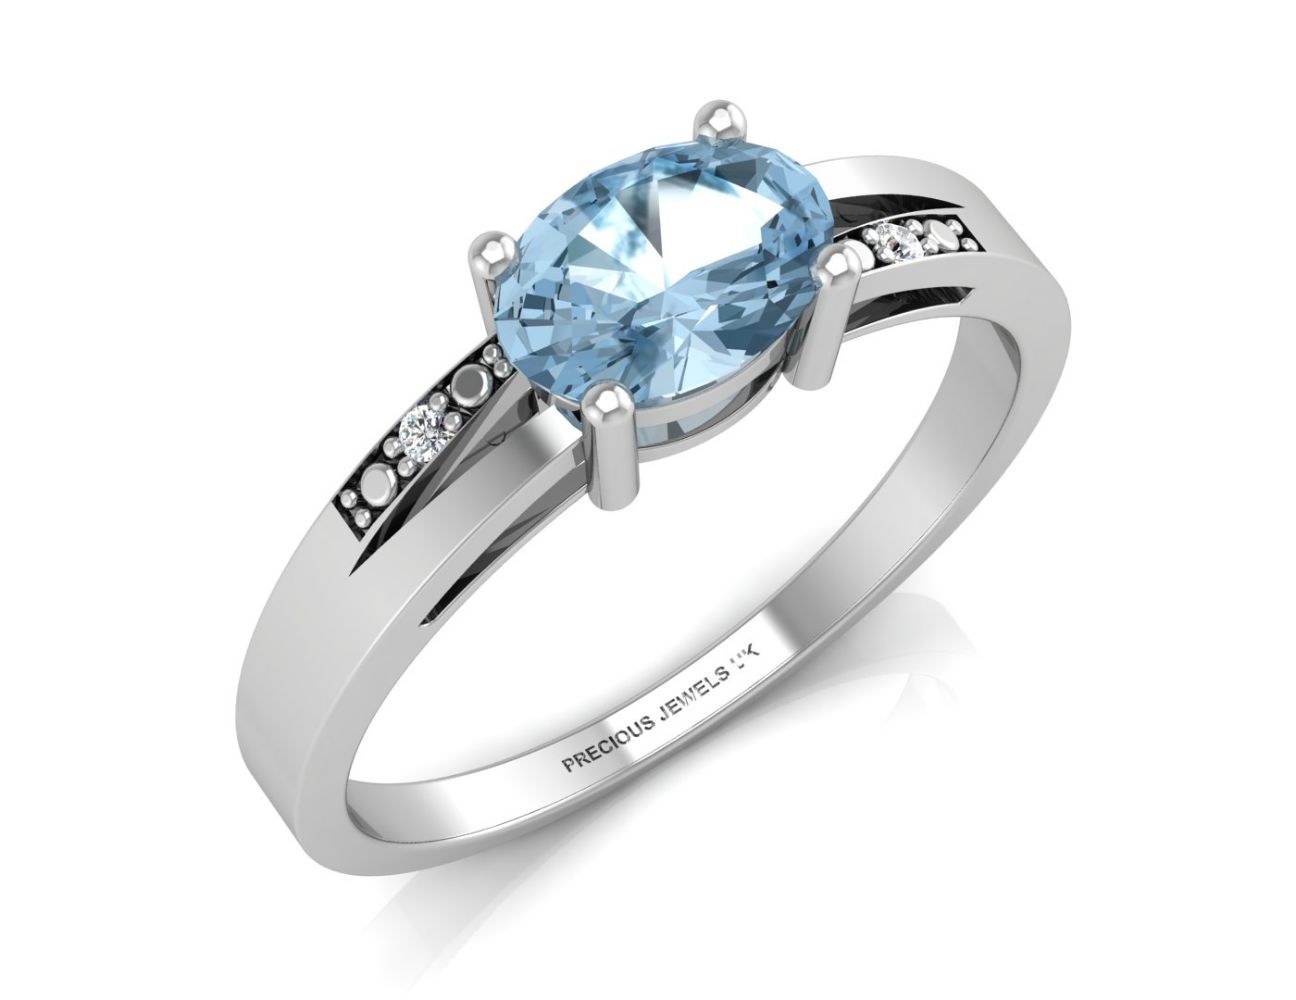 Certified Jewellery & Loose Gemstones | Platinum, White & Yellow Gold, Diamond Jewellery, Sapphires & more Precious Stones